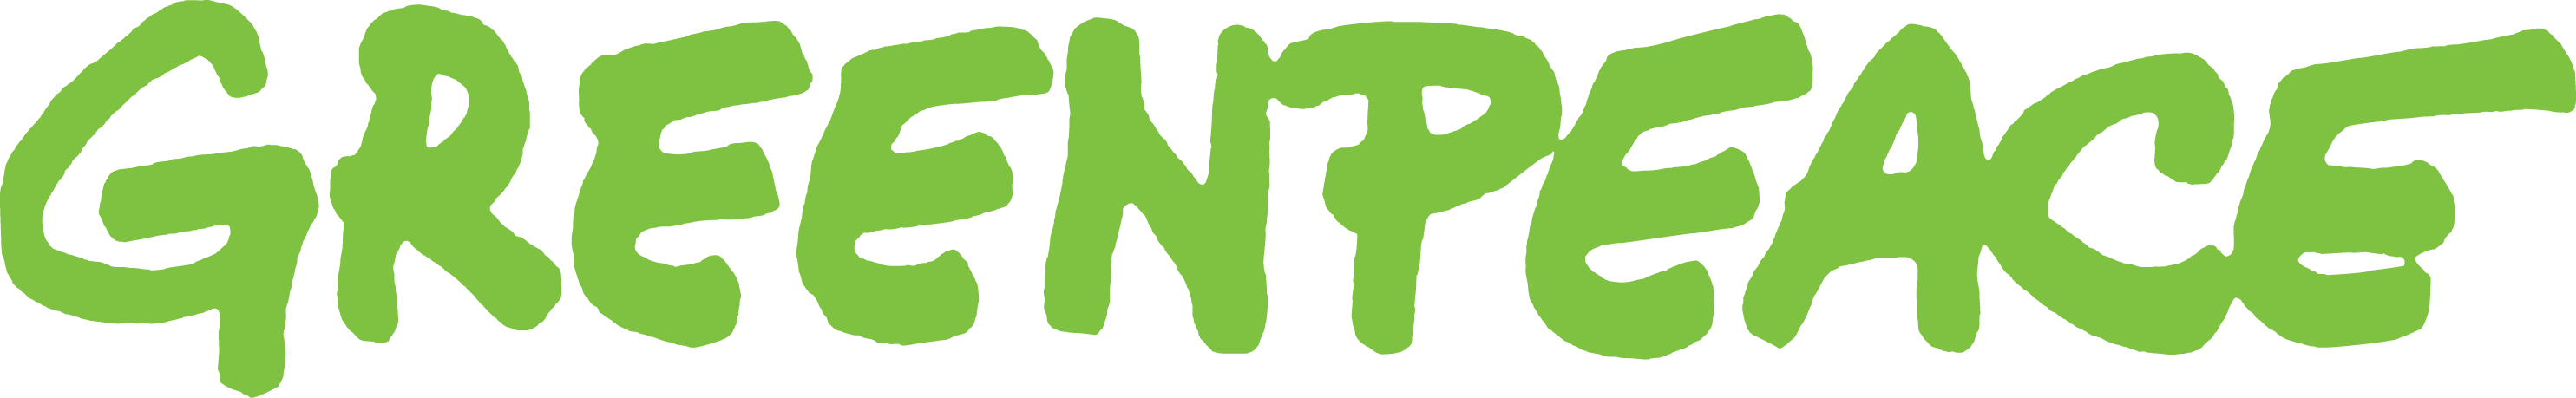 Logo Officiel De Greenpeace.